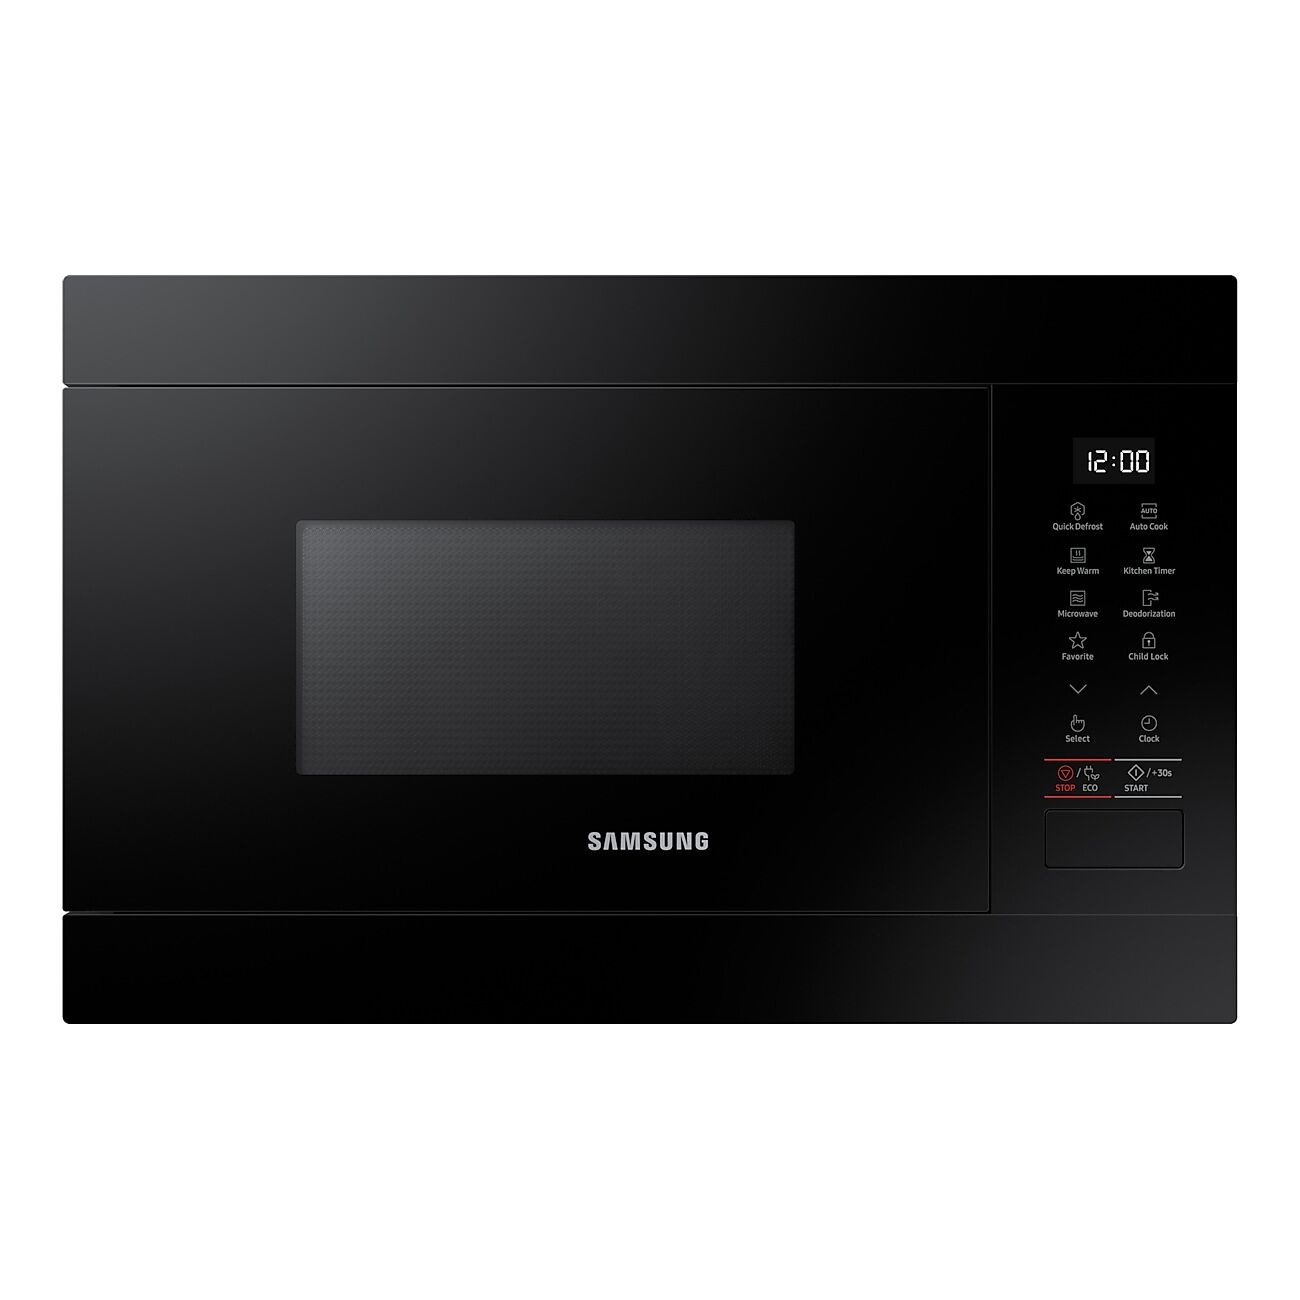 Samsung Built-In Solo Microwave, 22L, Black (MS22M8254AK/E3)